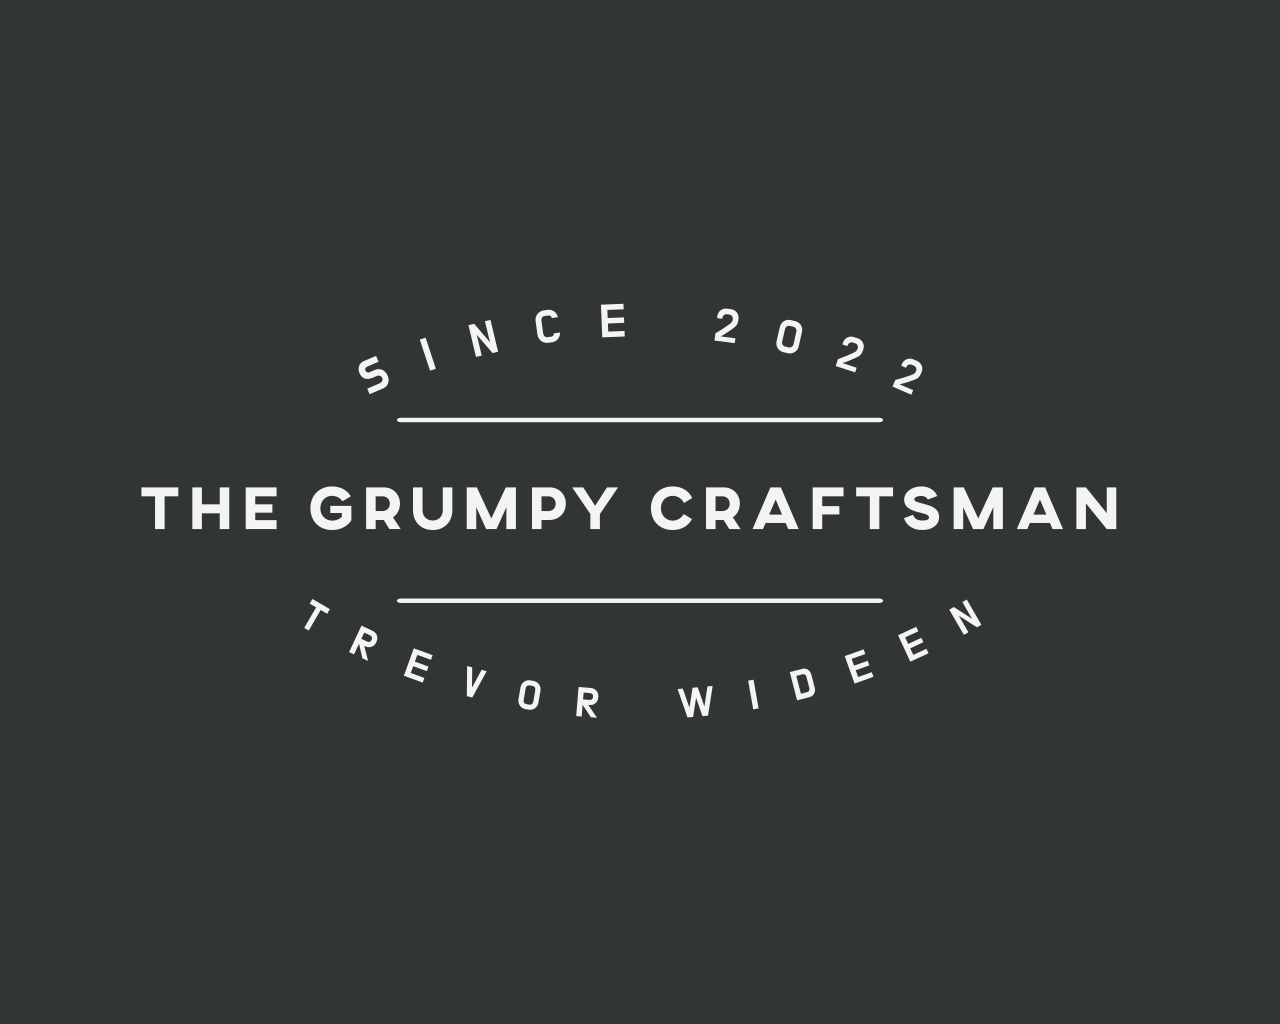 The Grumpy Craftsman 's web page